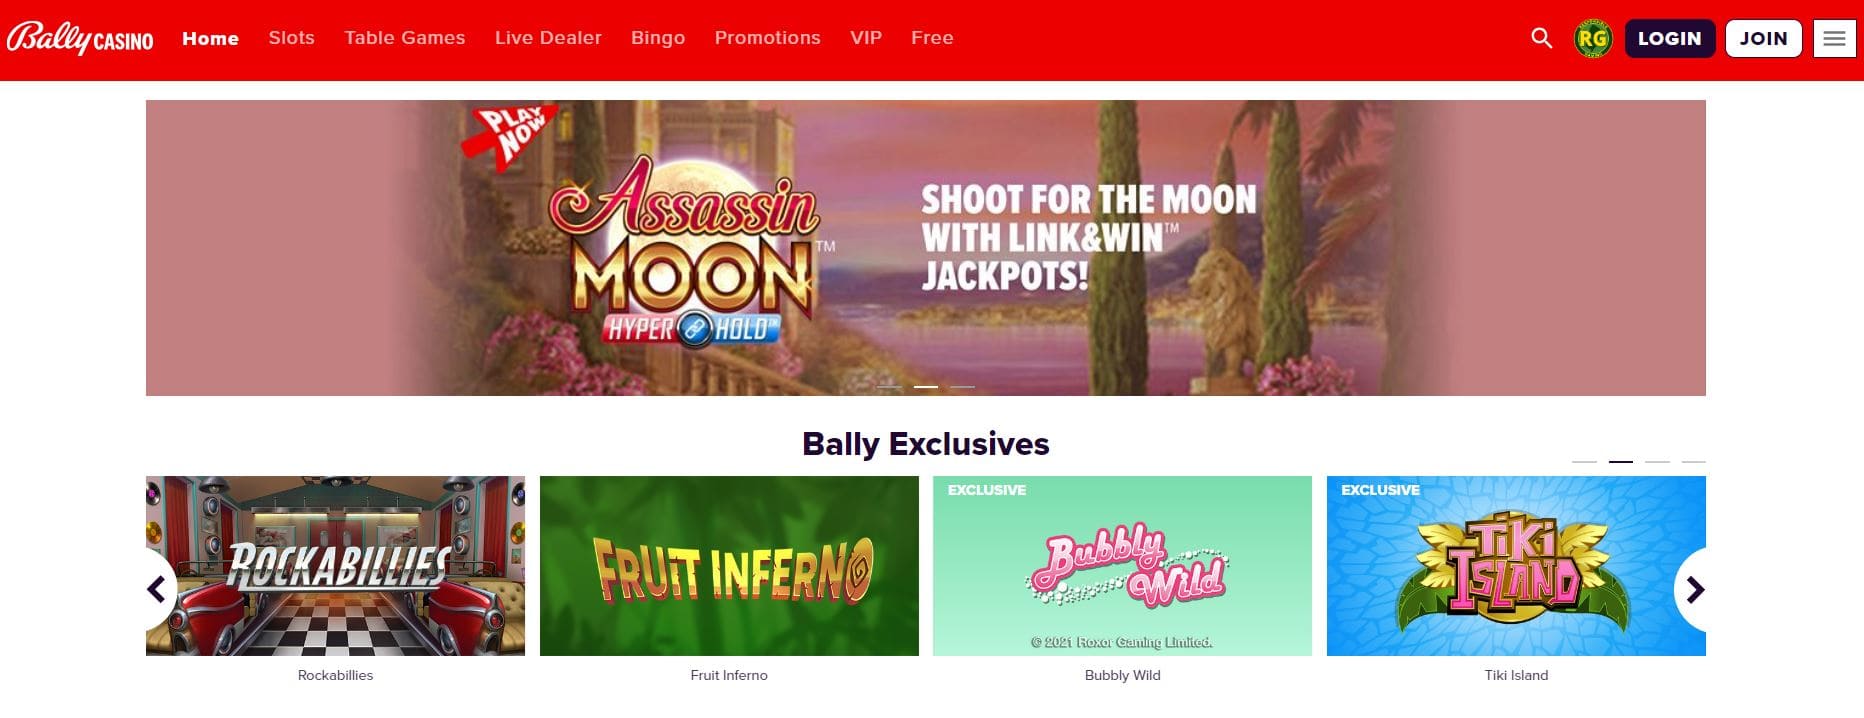 Bally's Online Casino Games